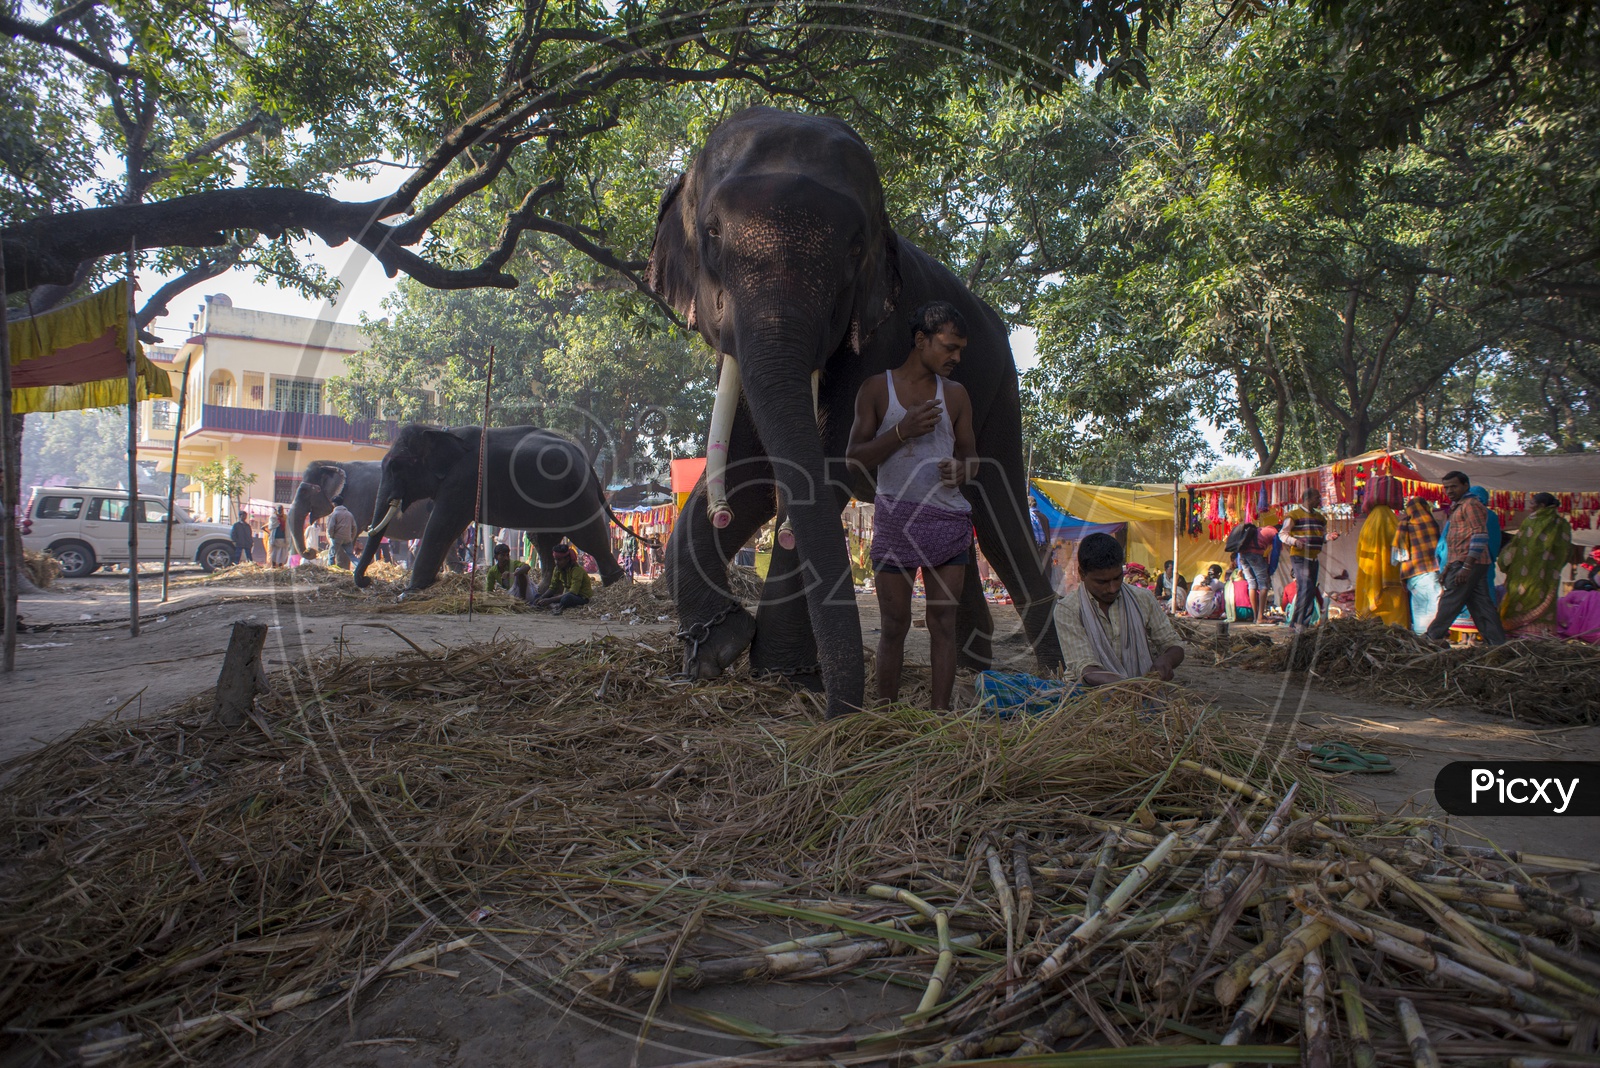 Elephant Eating Sugar Canes